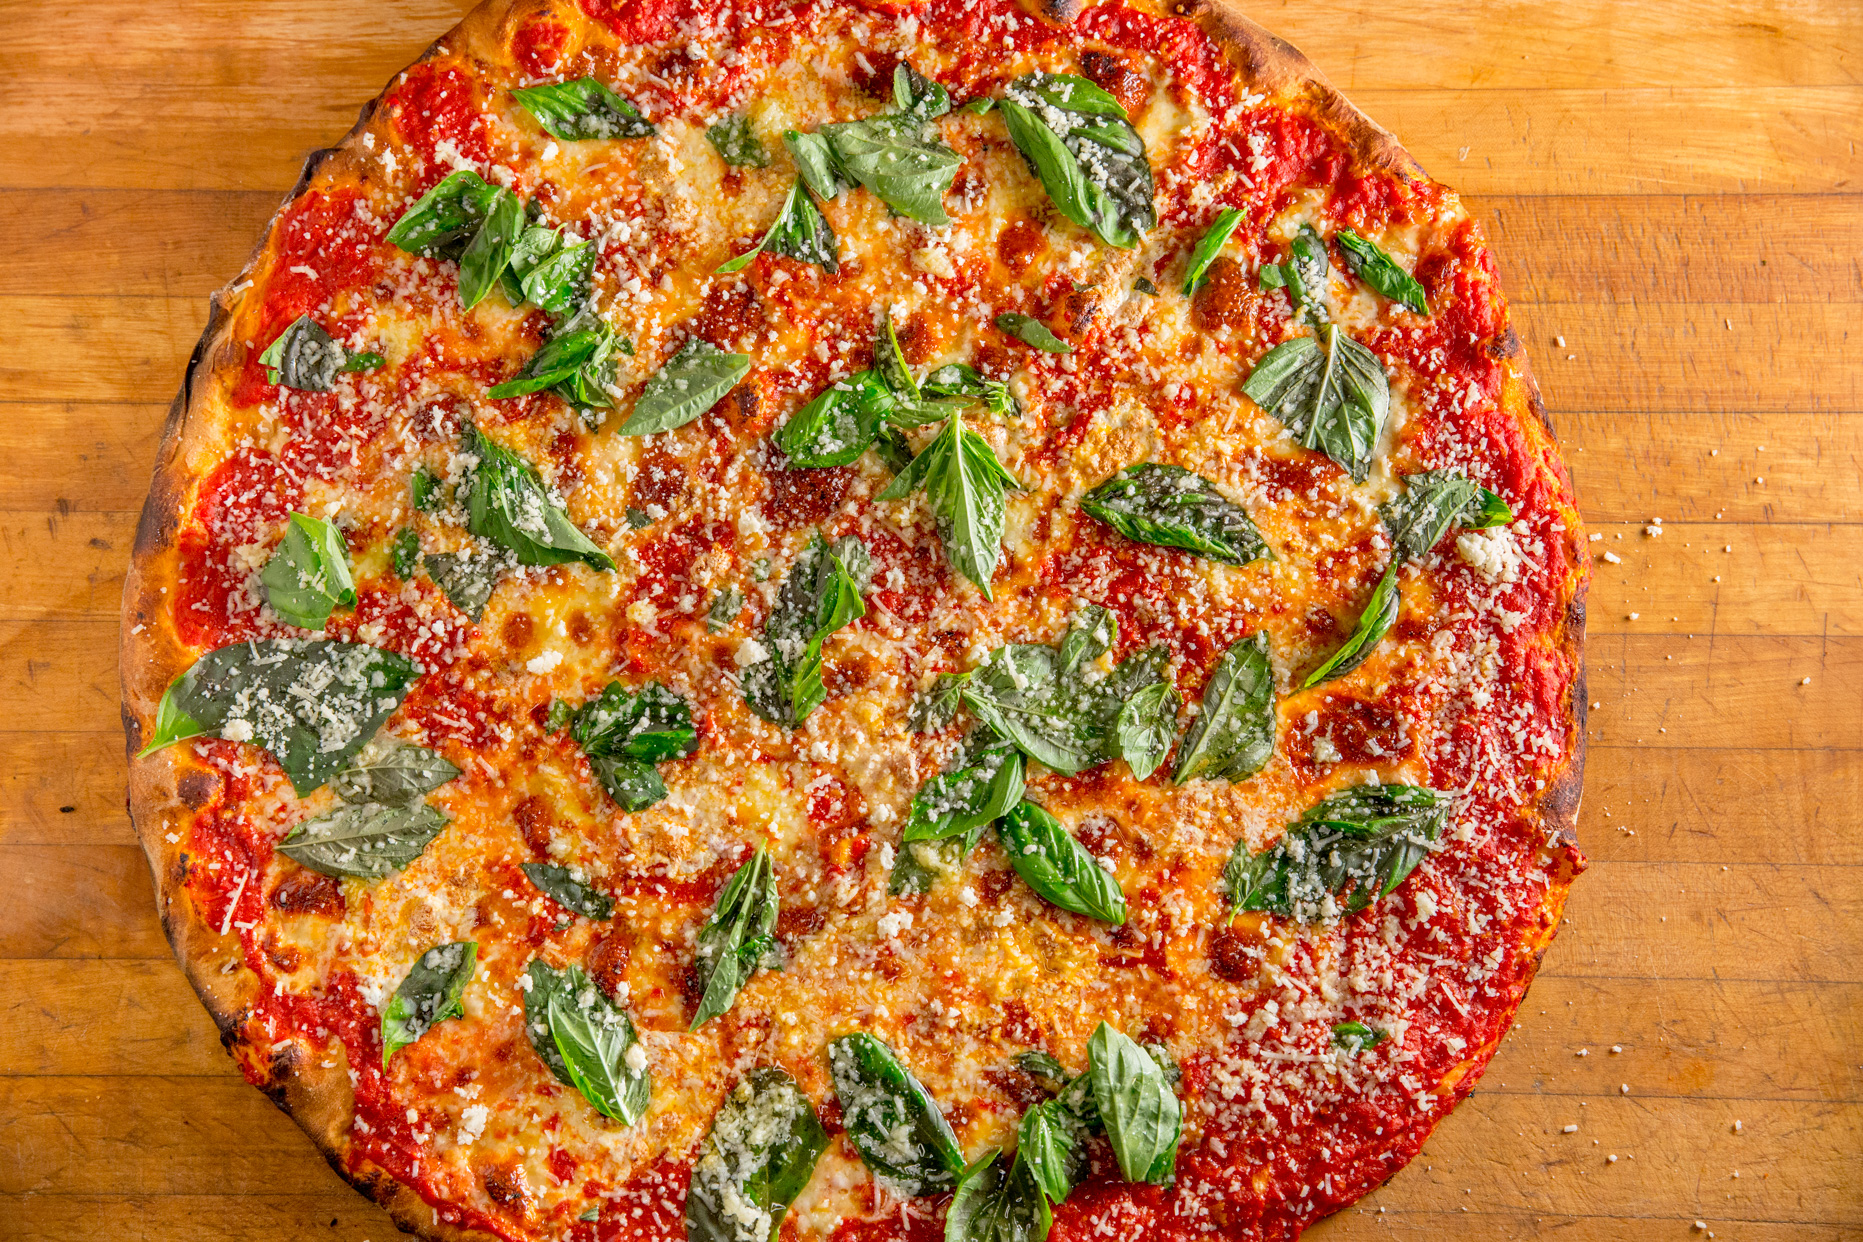 Artichoke Basille's margherita pizza